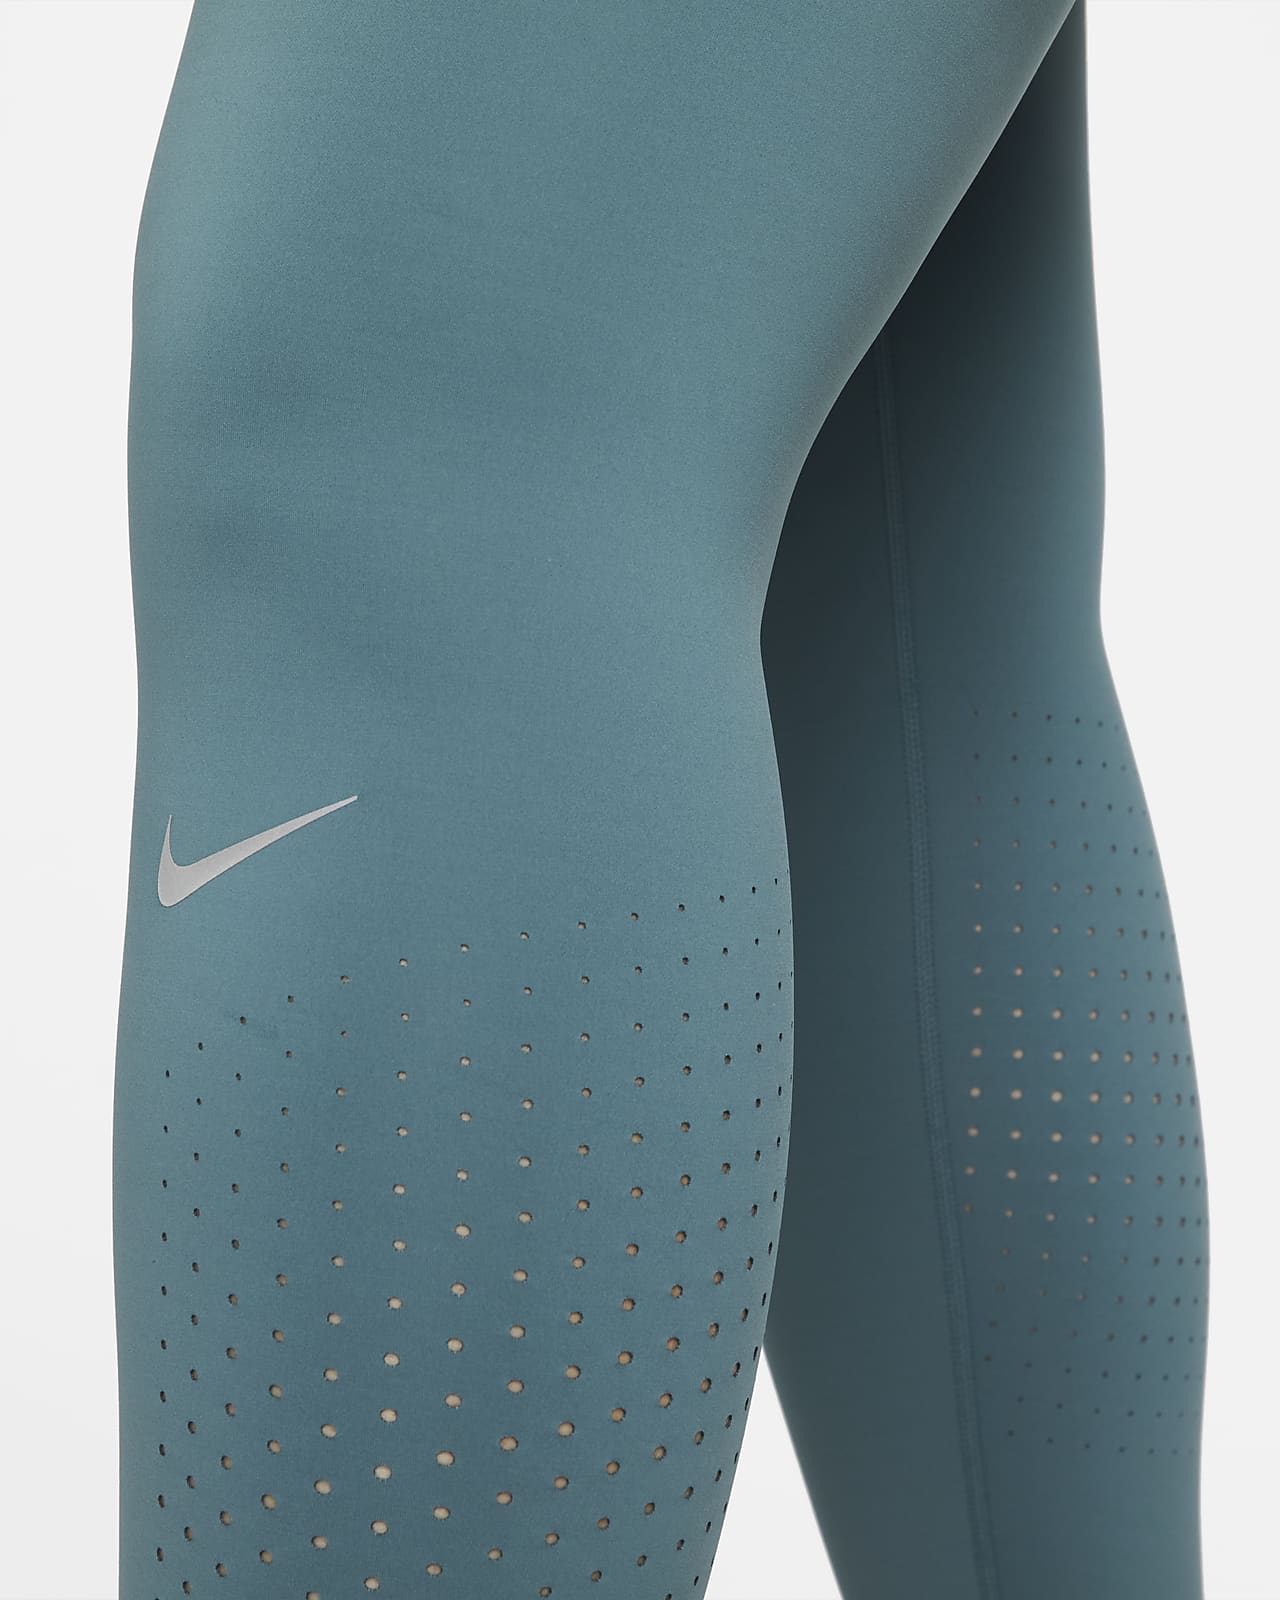 Epic Luxe Mid-Rise Pocket Running Leggings (Plus Size). Nike